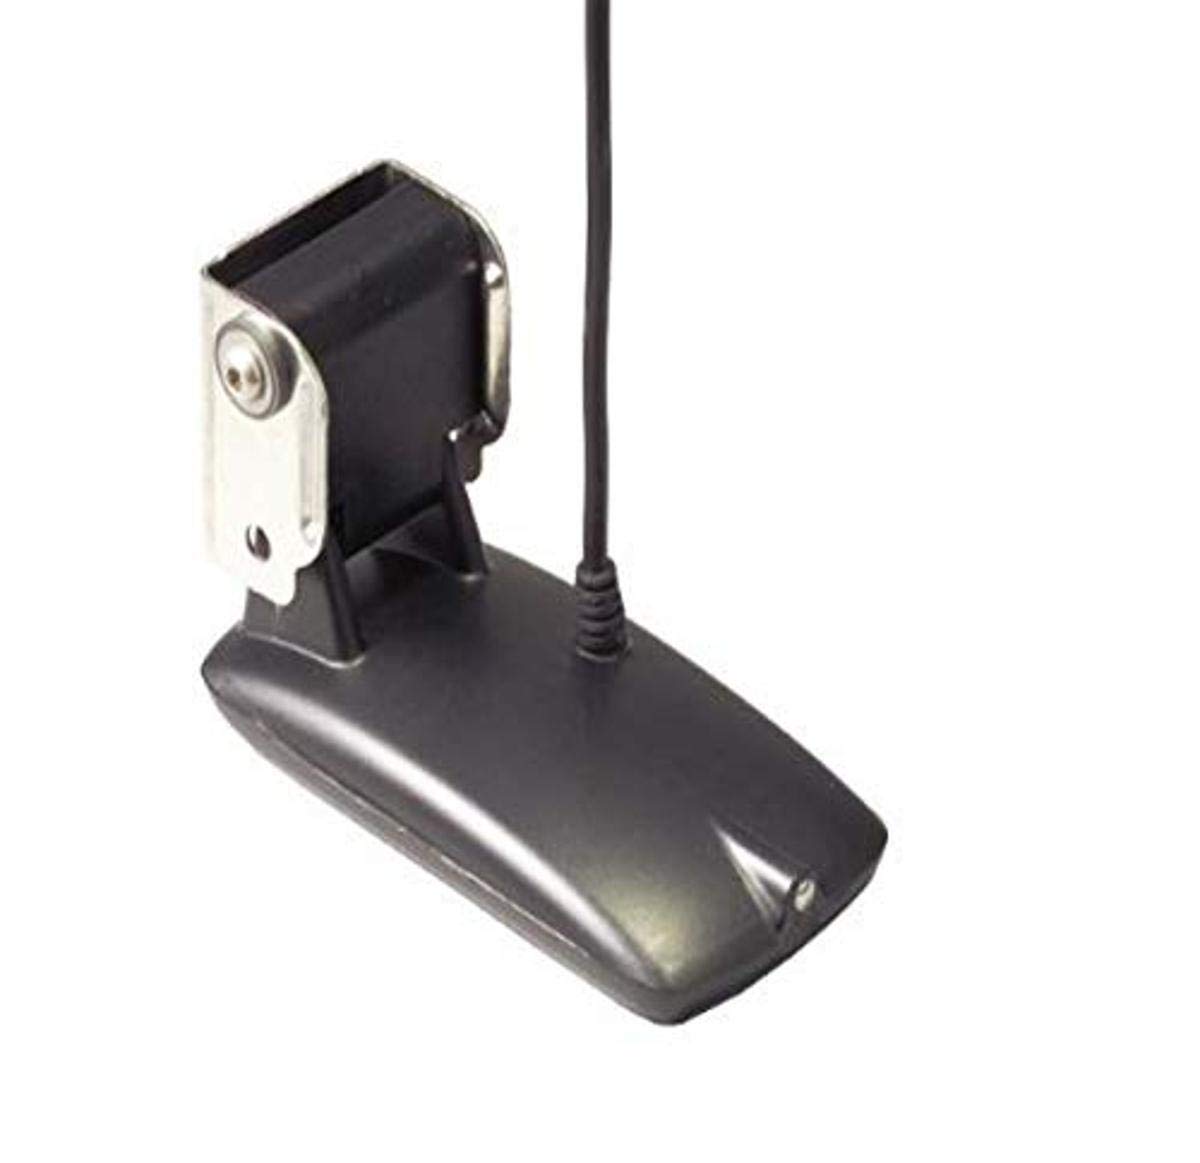 Humminbird 710201-1 XHS 9 HDSI 180 T (HD Side Imaging) Transom Mount Transducer